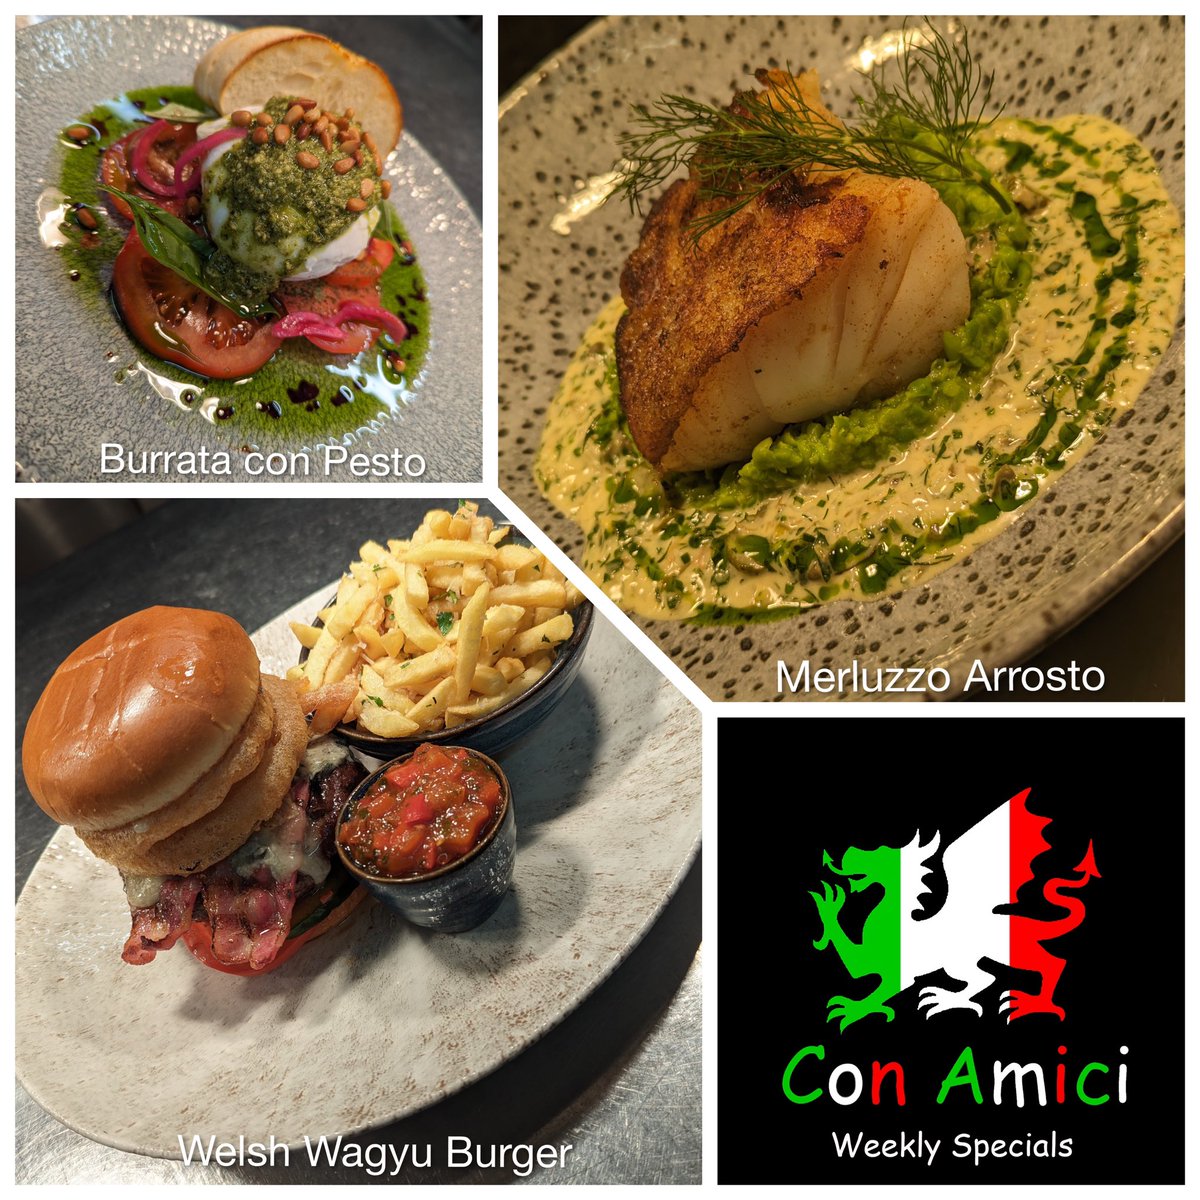 Con Amici Weekly Specials  #Italianfood #Denbigh #NorthWales #weeklyspecials